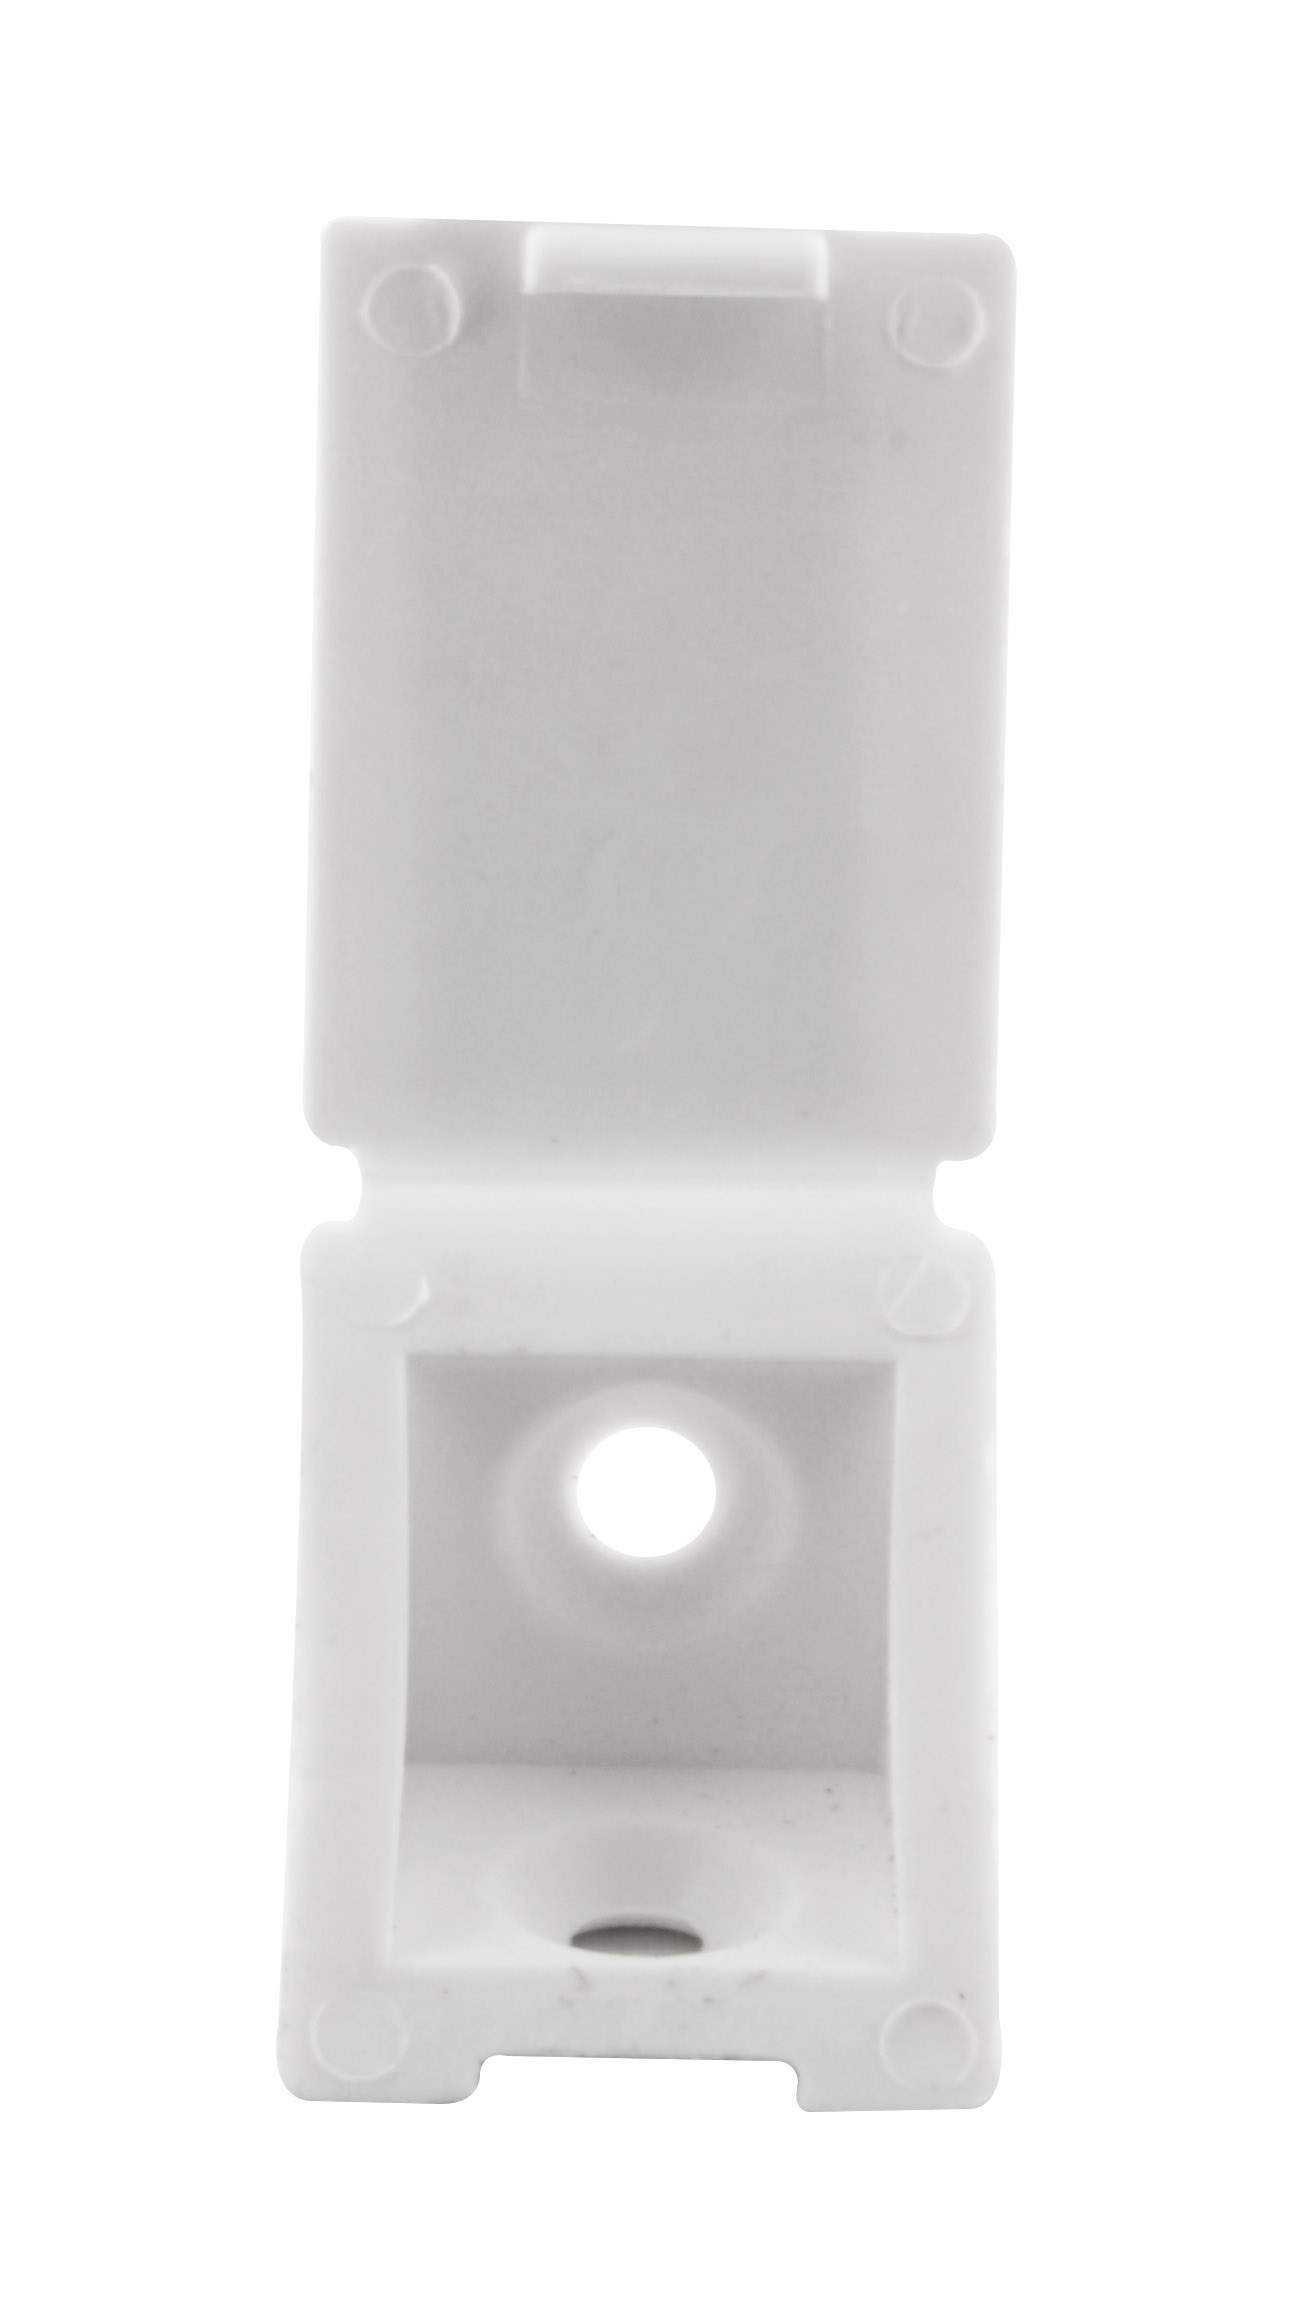 Tacchetto singolo quadrato, PVC bianco, L22xH22x23mm, 12 pezzi.